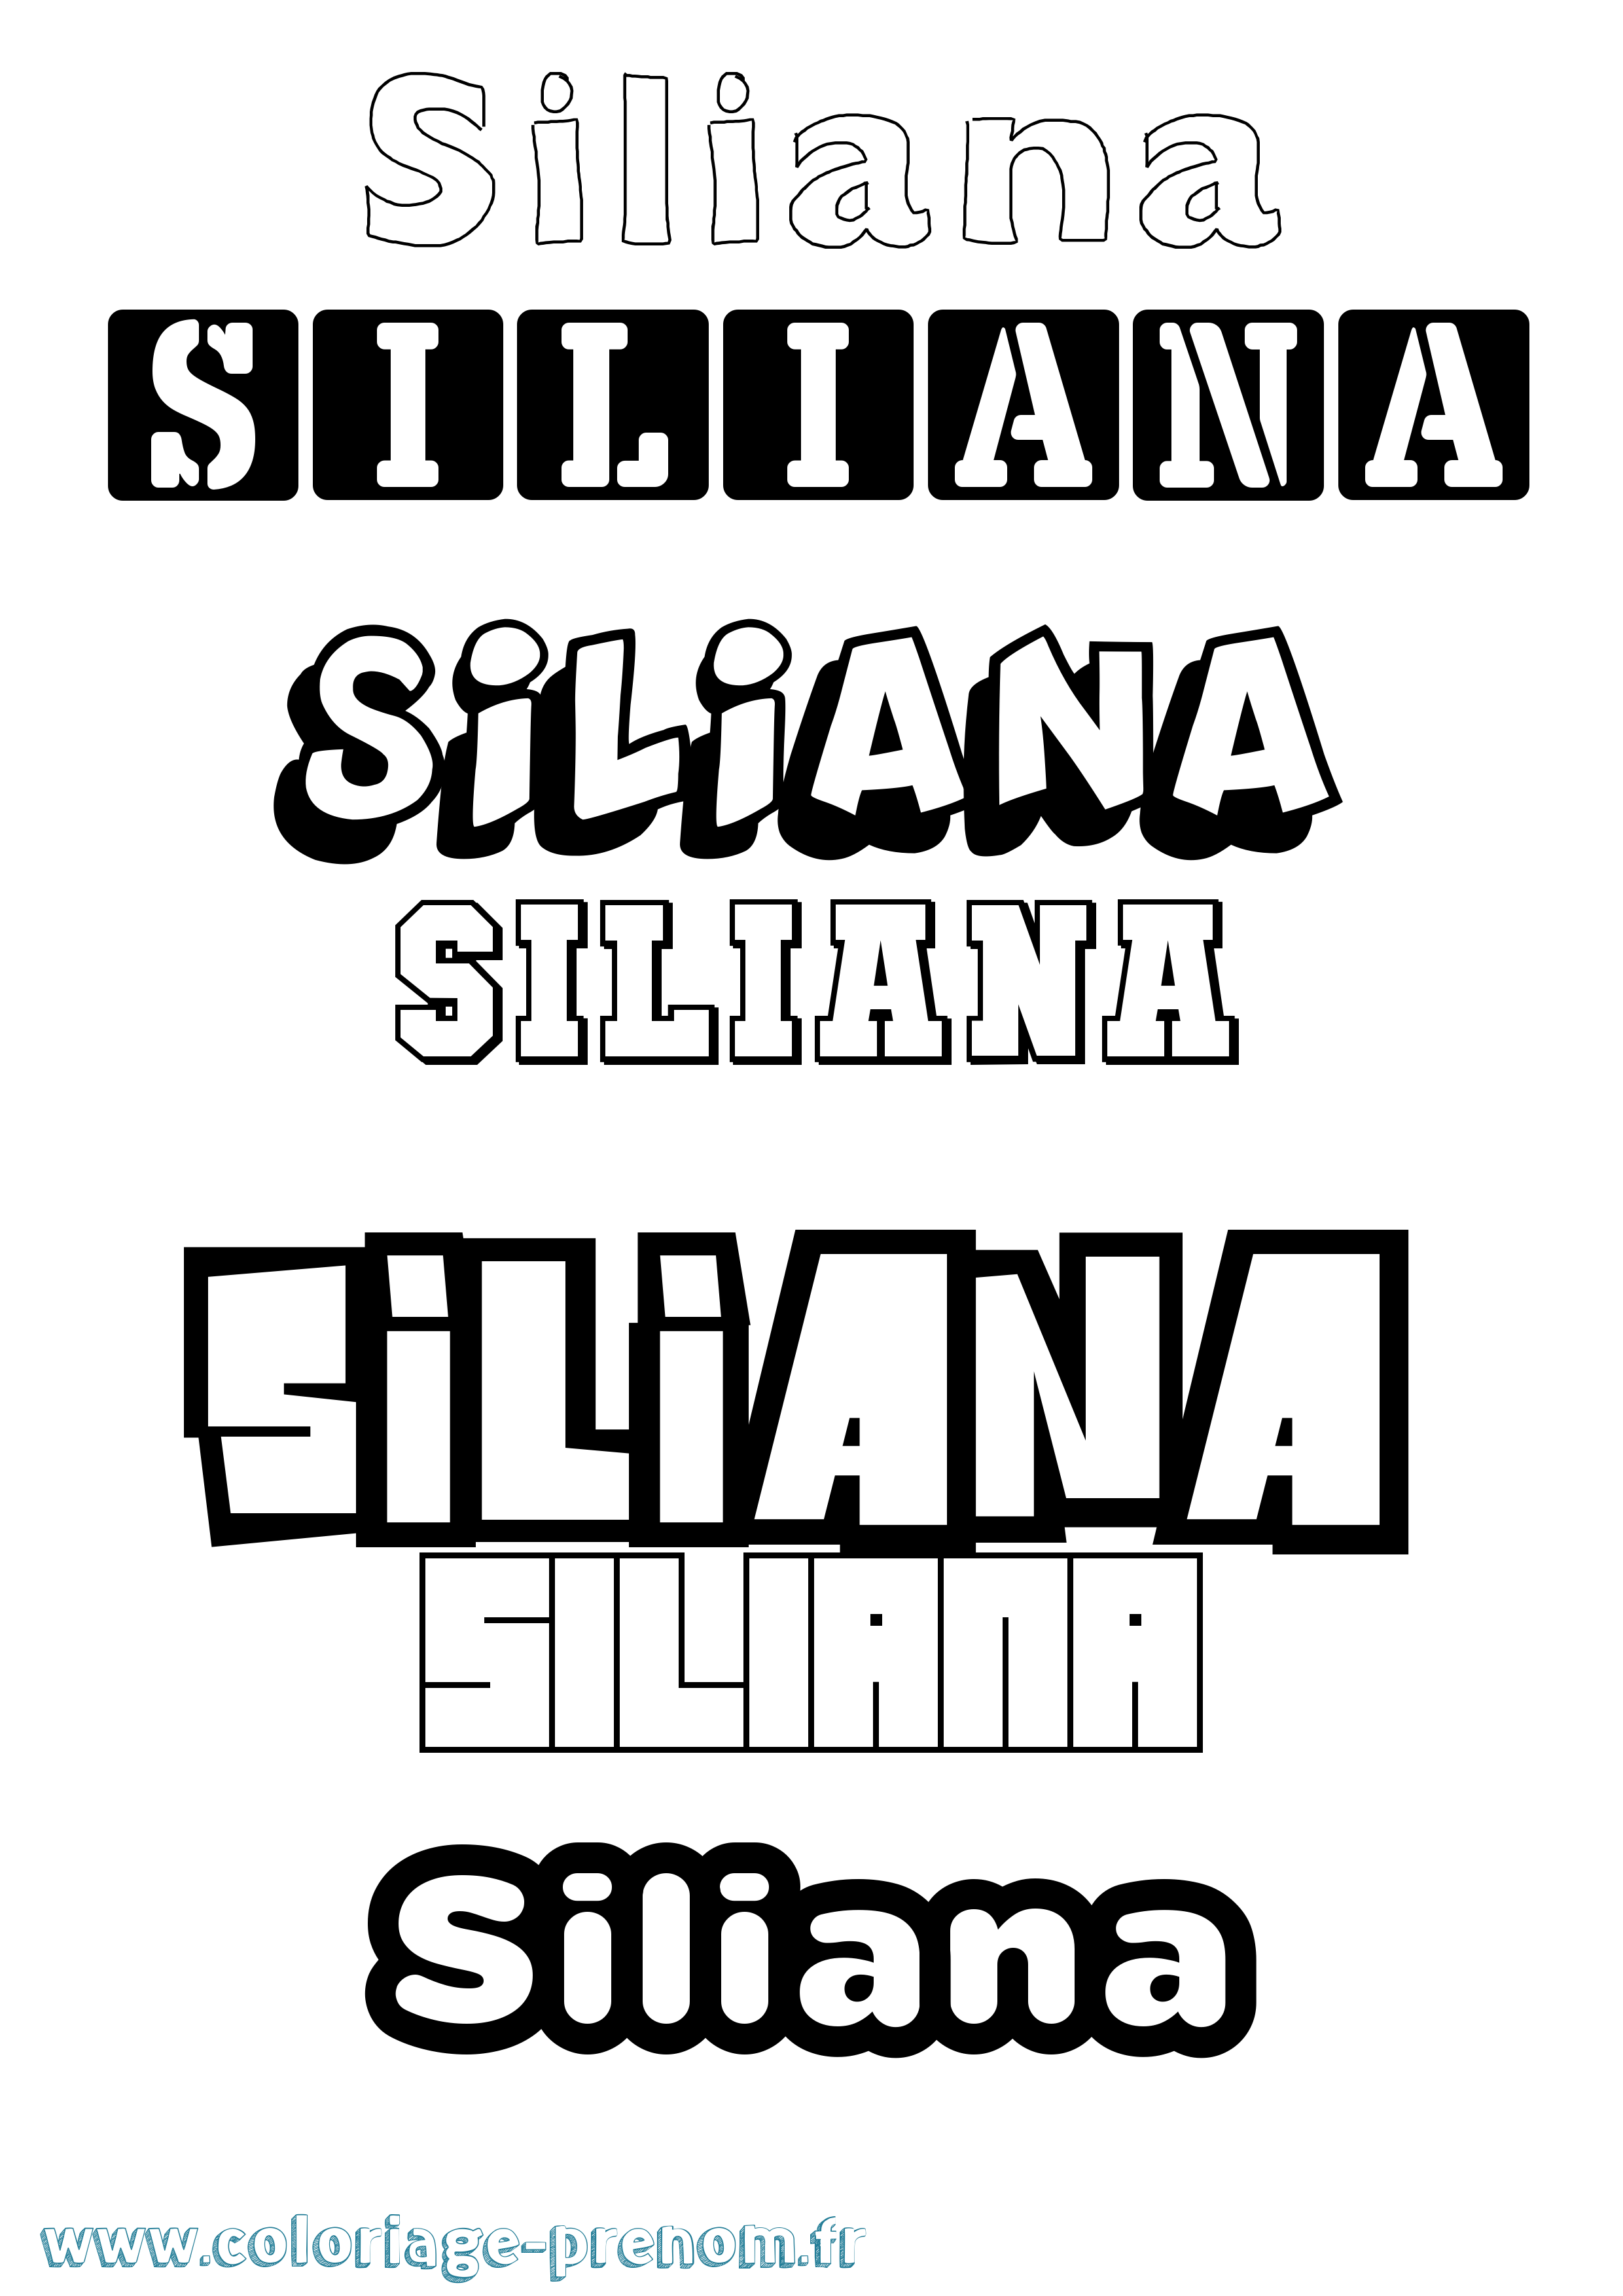 Coloriage prénom Siliana Simple